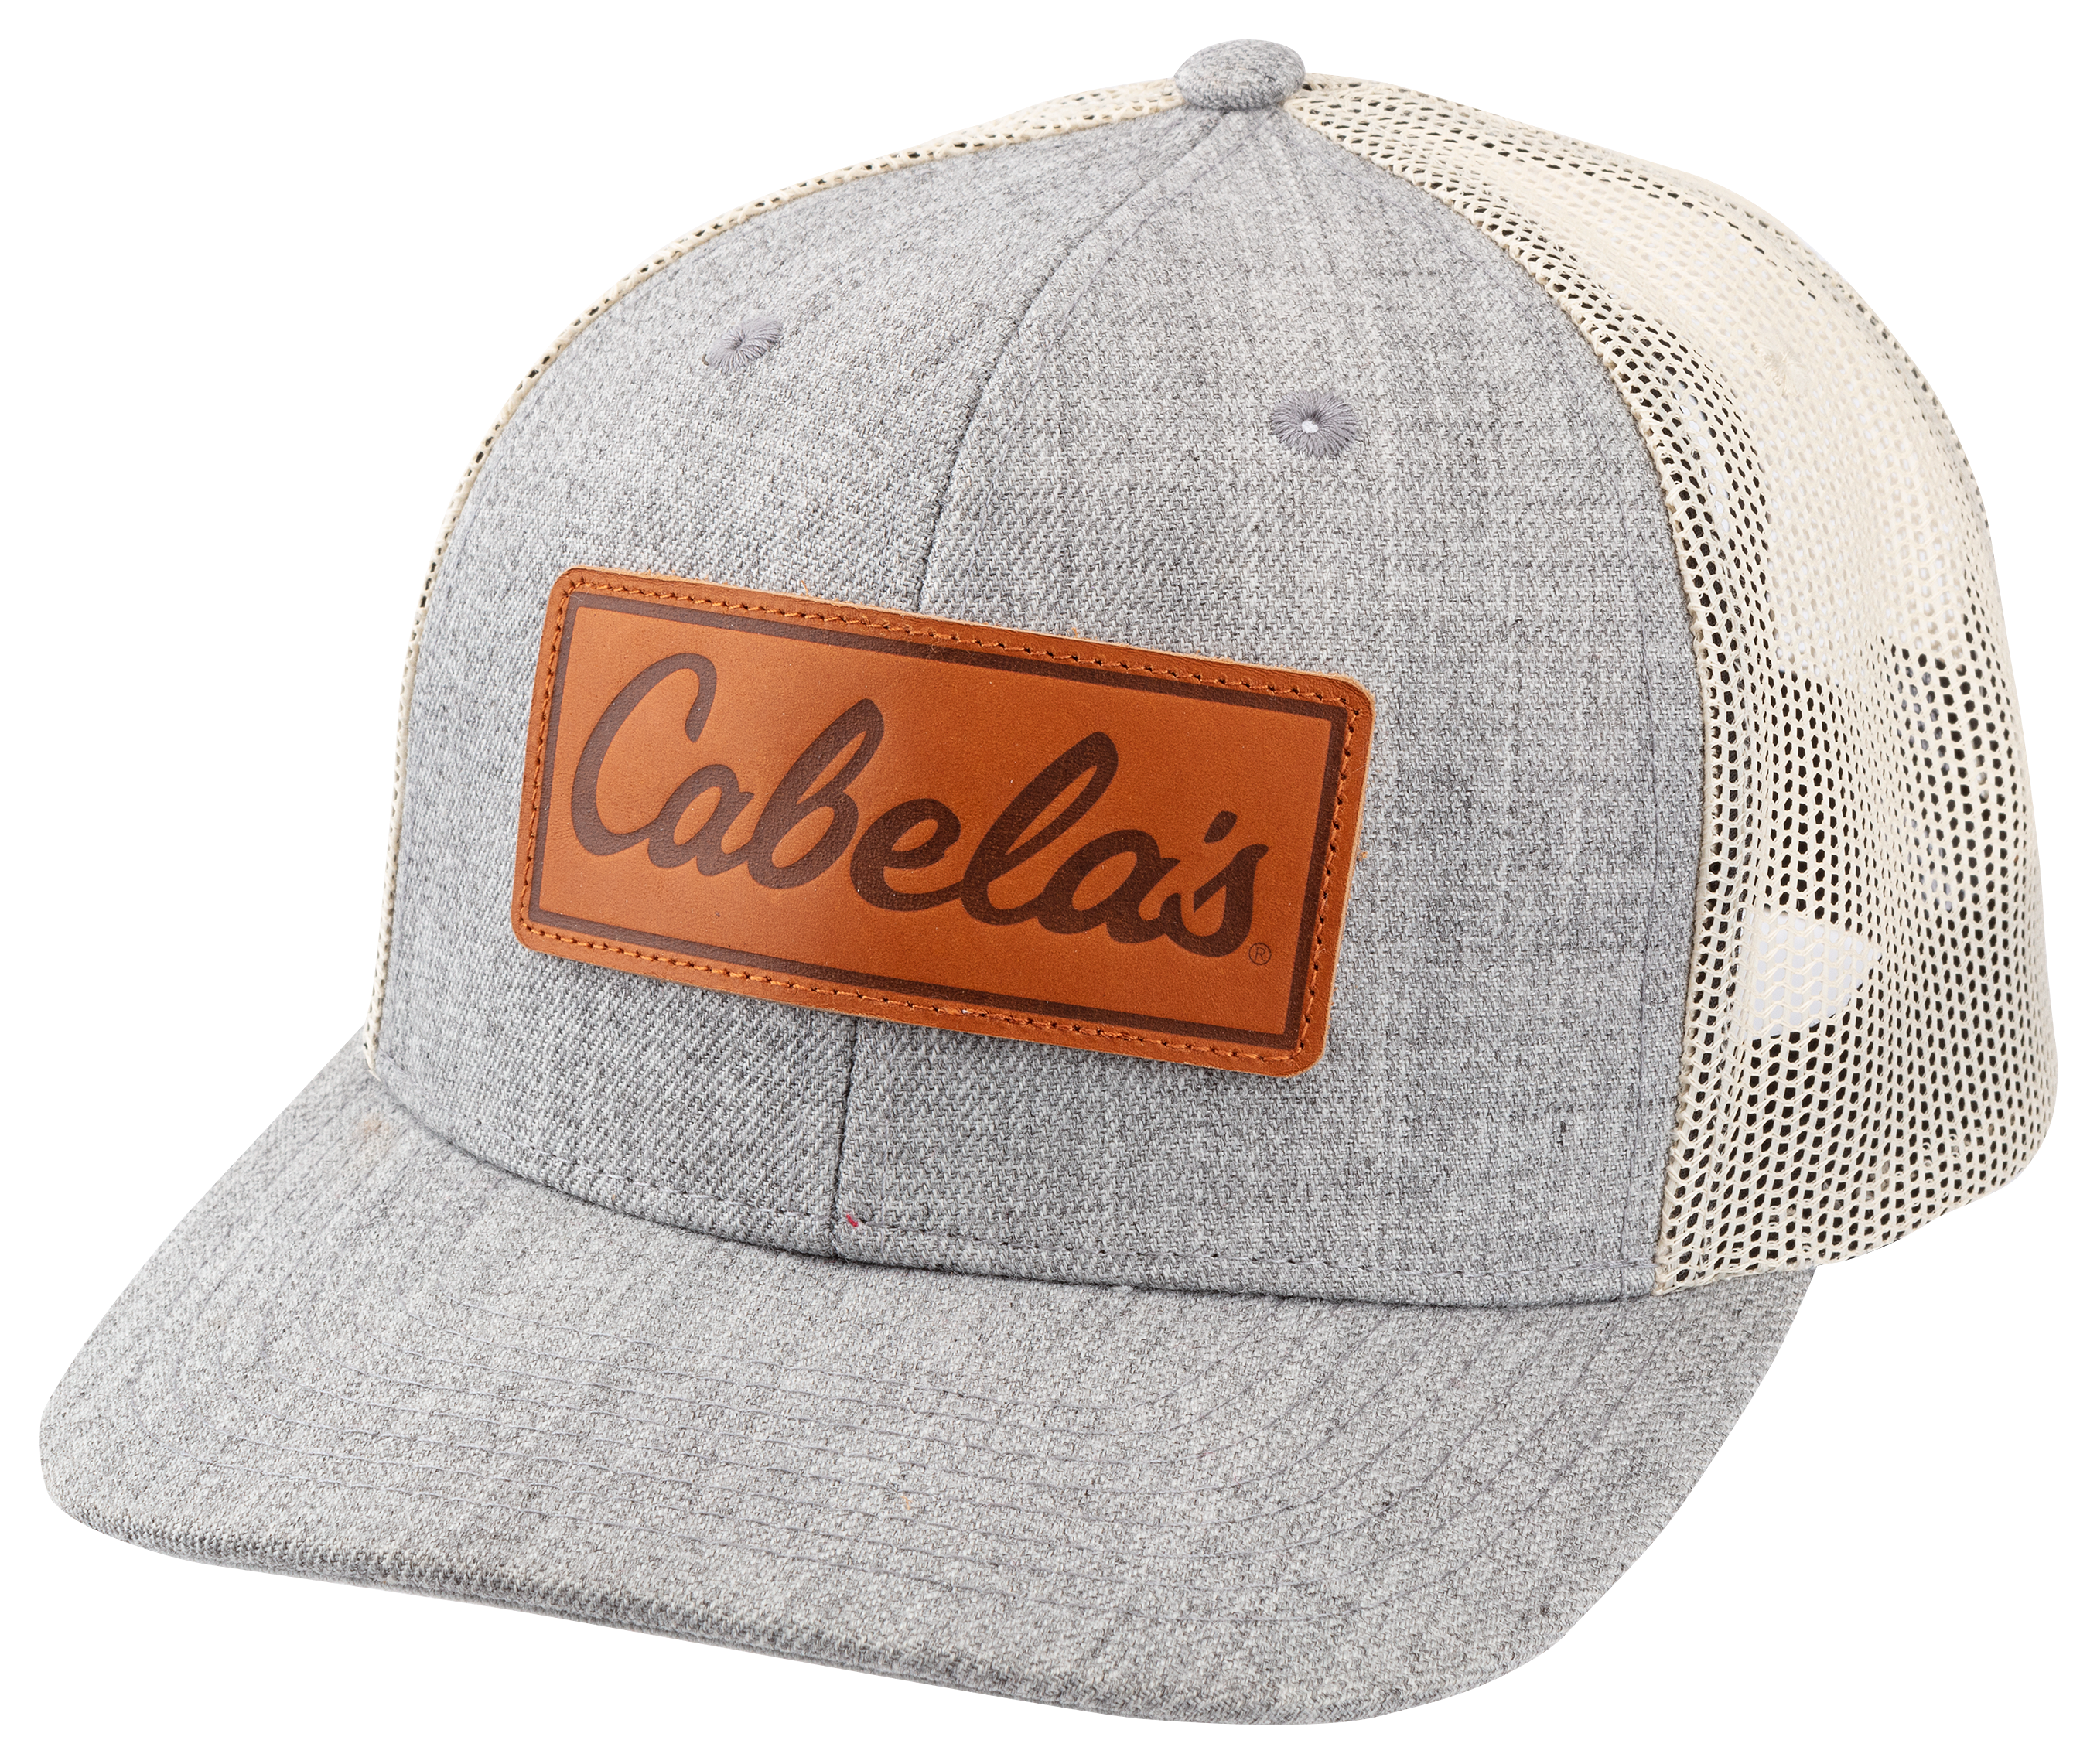 Cabela's Flannel Buffalo Plaid Cap